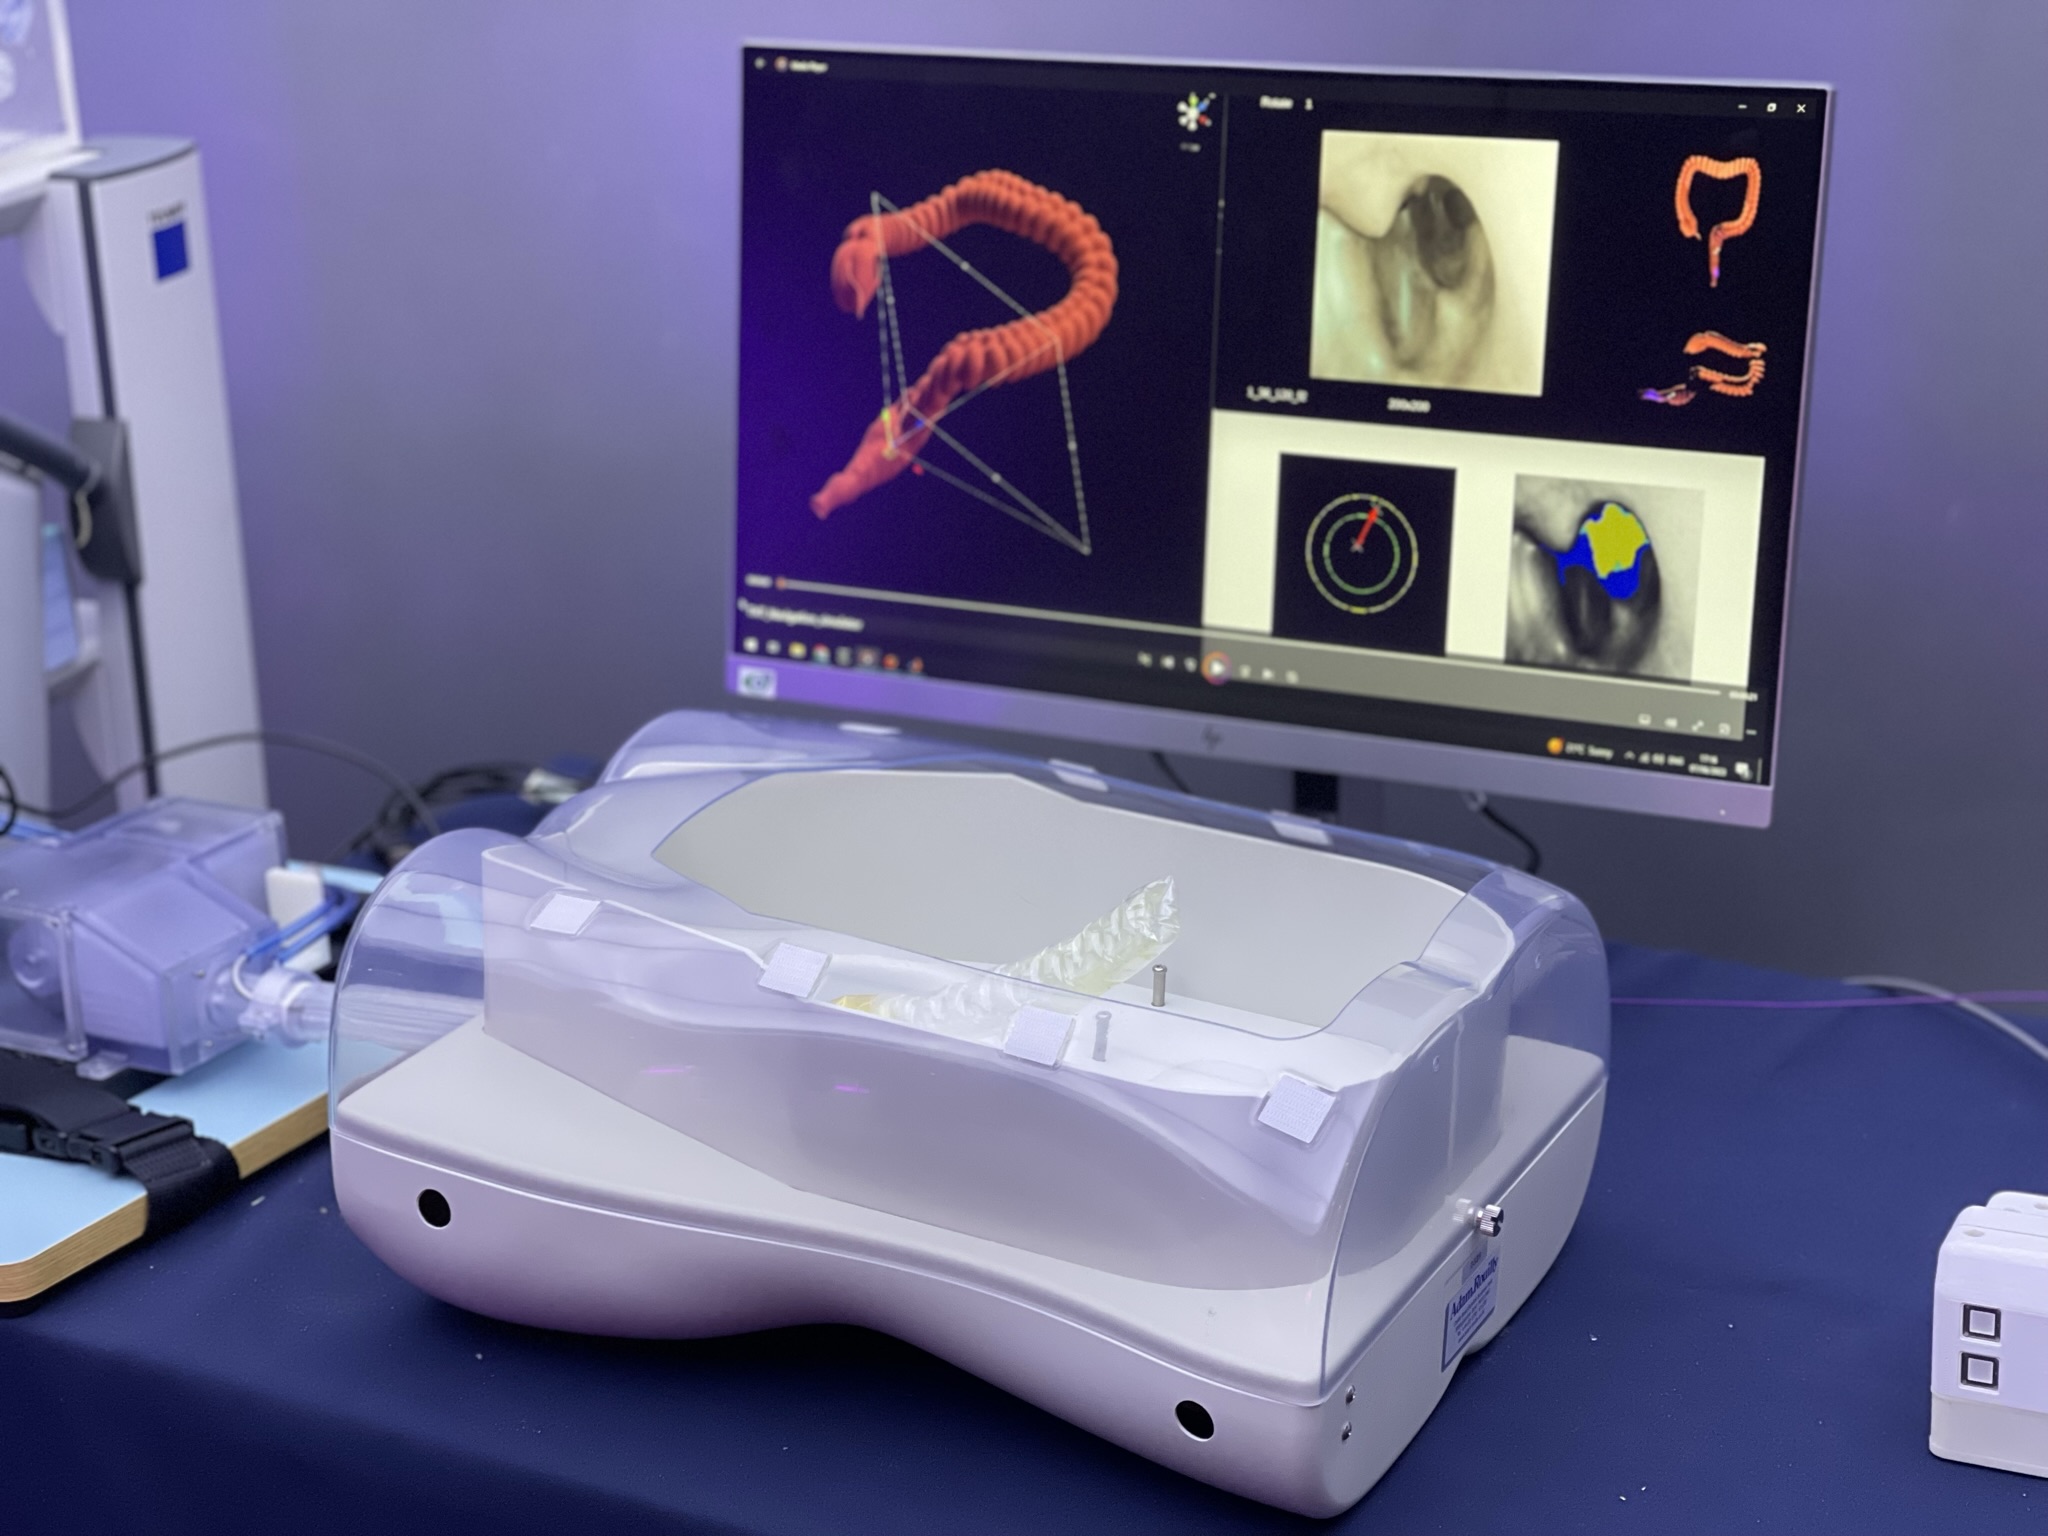 The robotic endoscope can self propel through the body